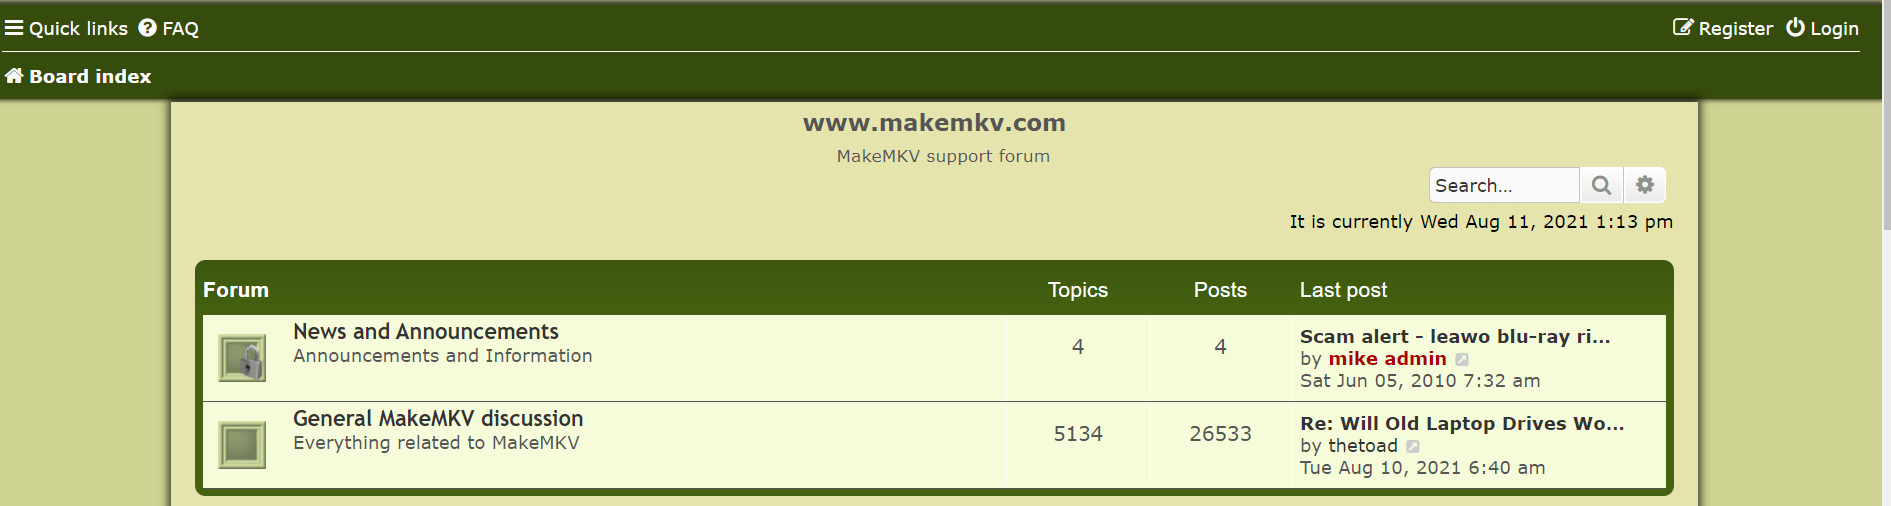 makemkv homepage